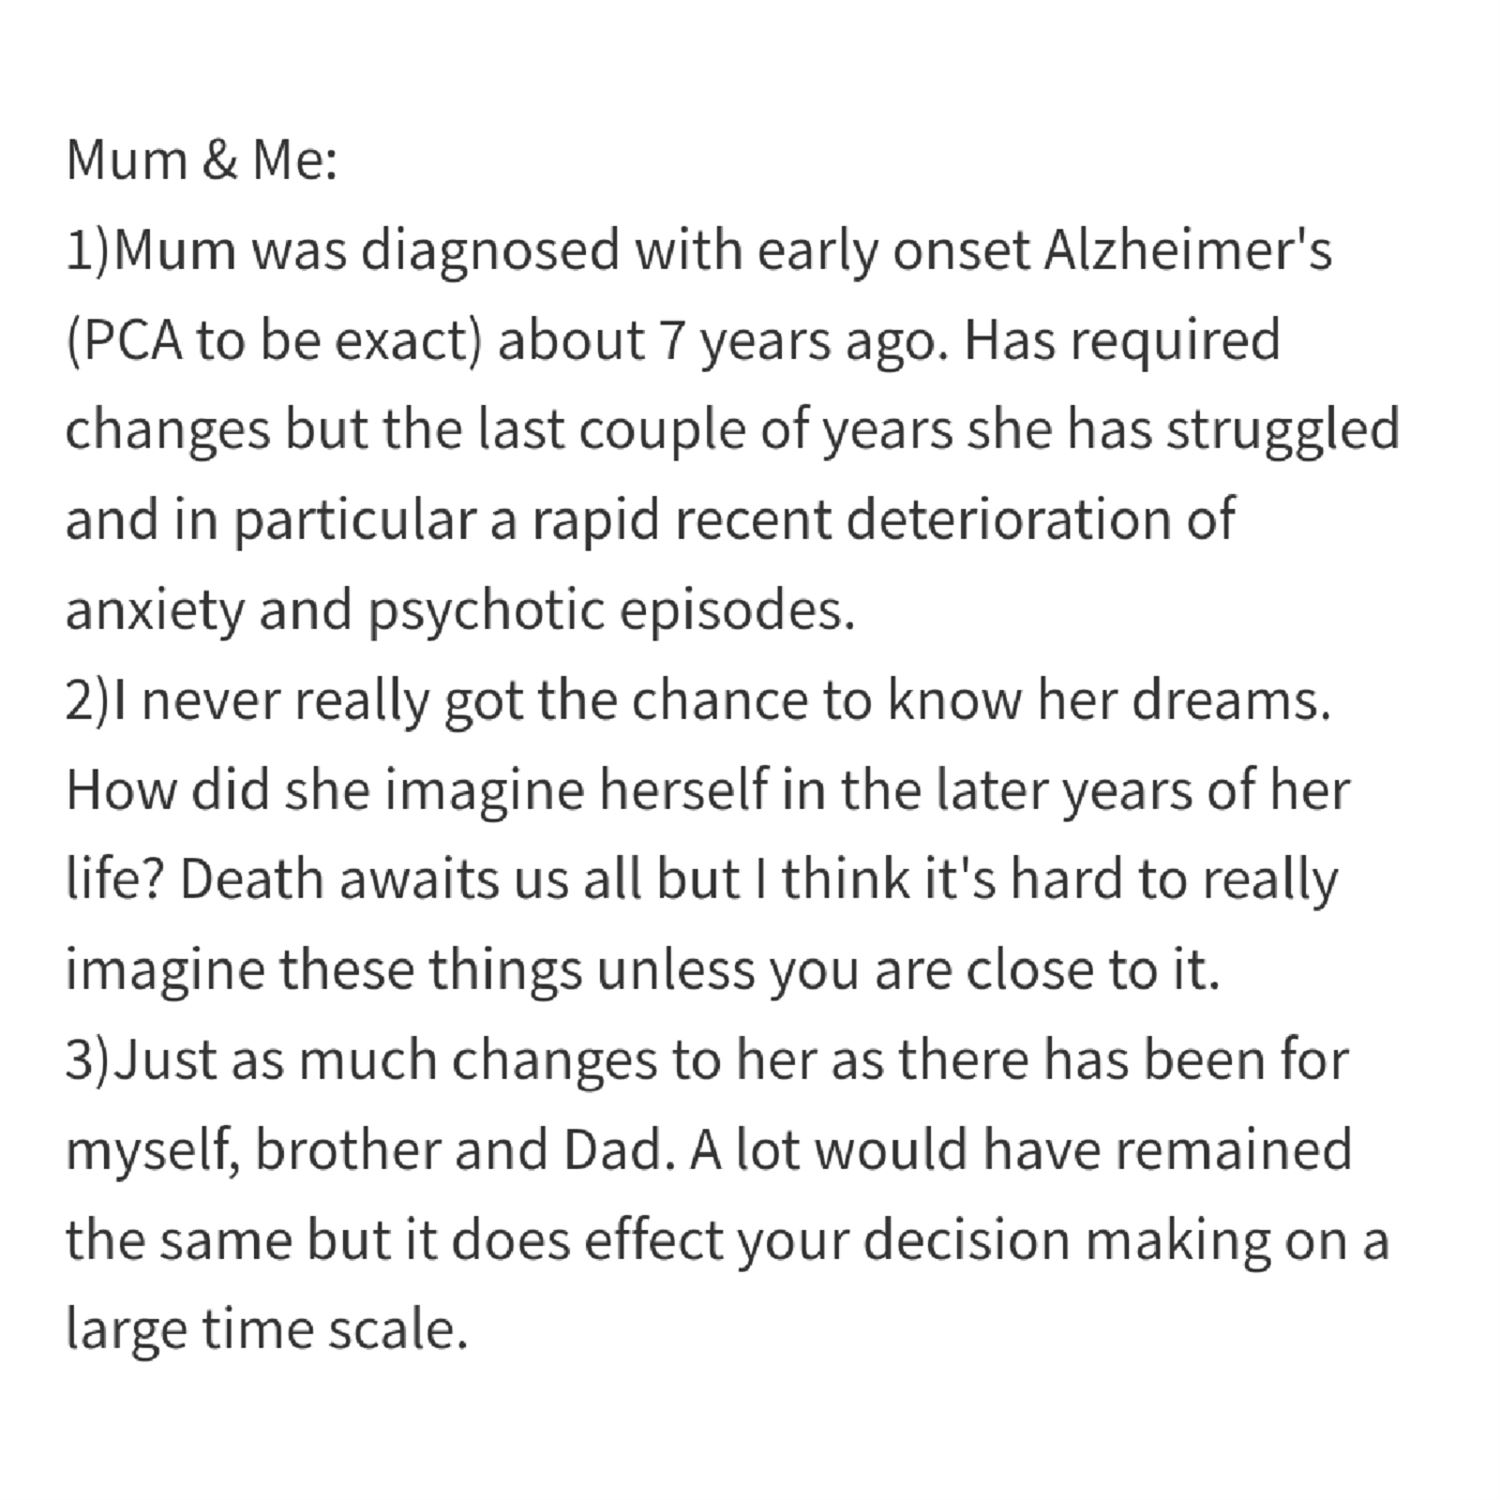 My Mum's diagnosis